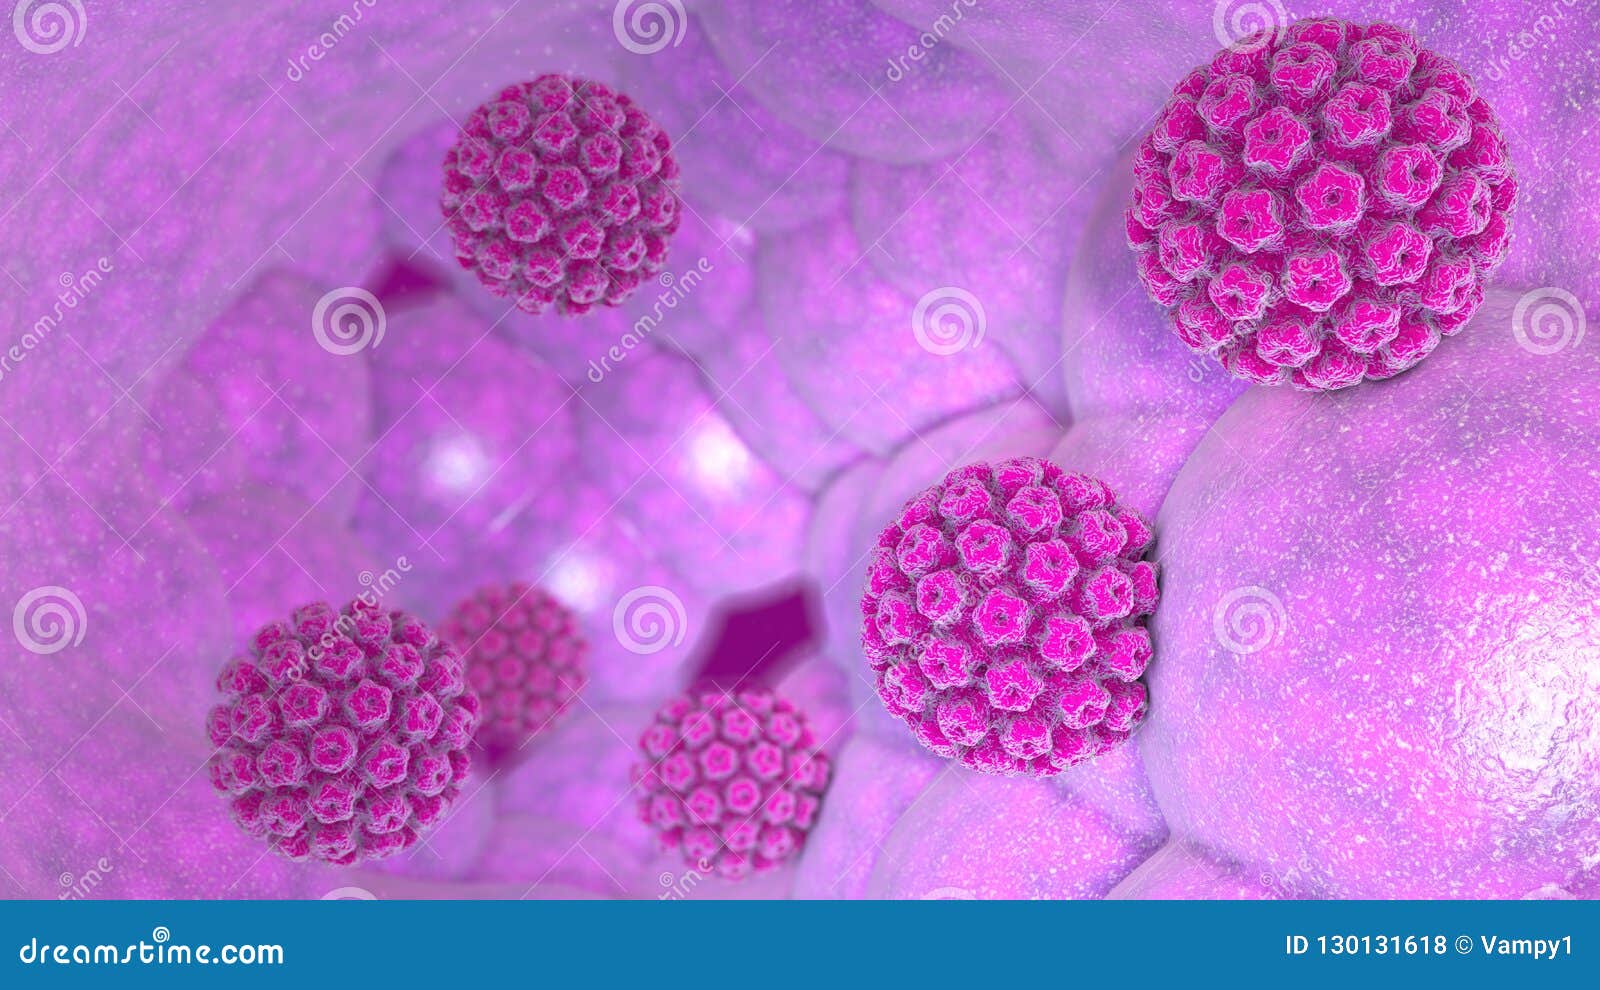 Papillomavirus humain( hpv), Mode de contamination du papillomavirus cheloo la